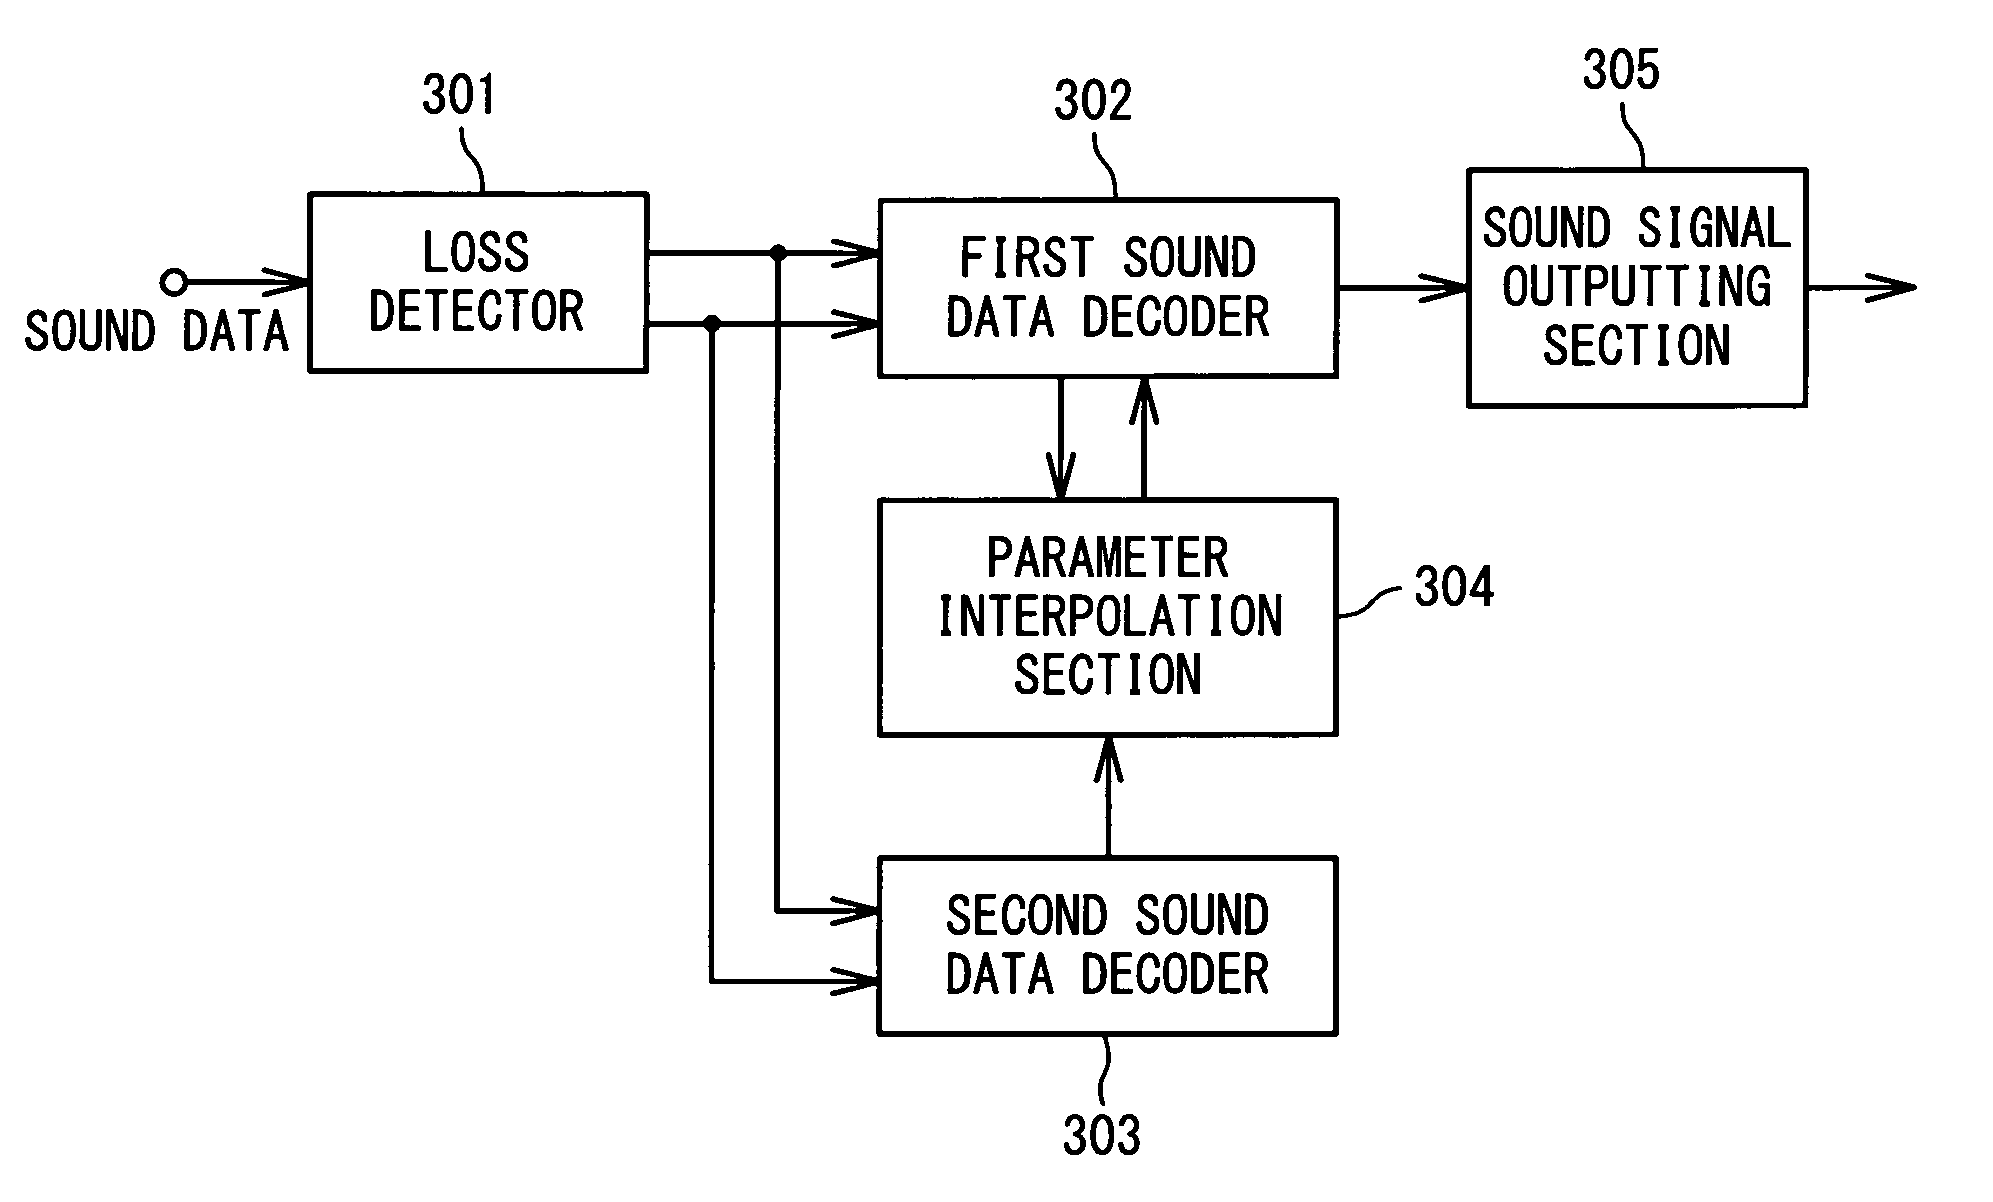 Sound data decoding apparatus